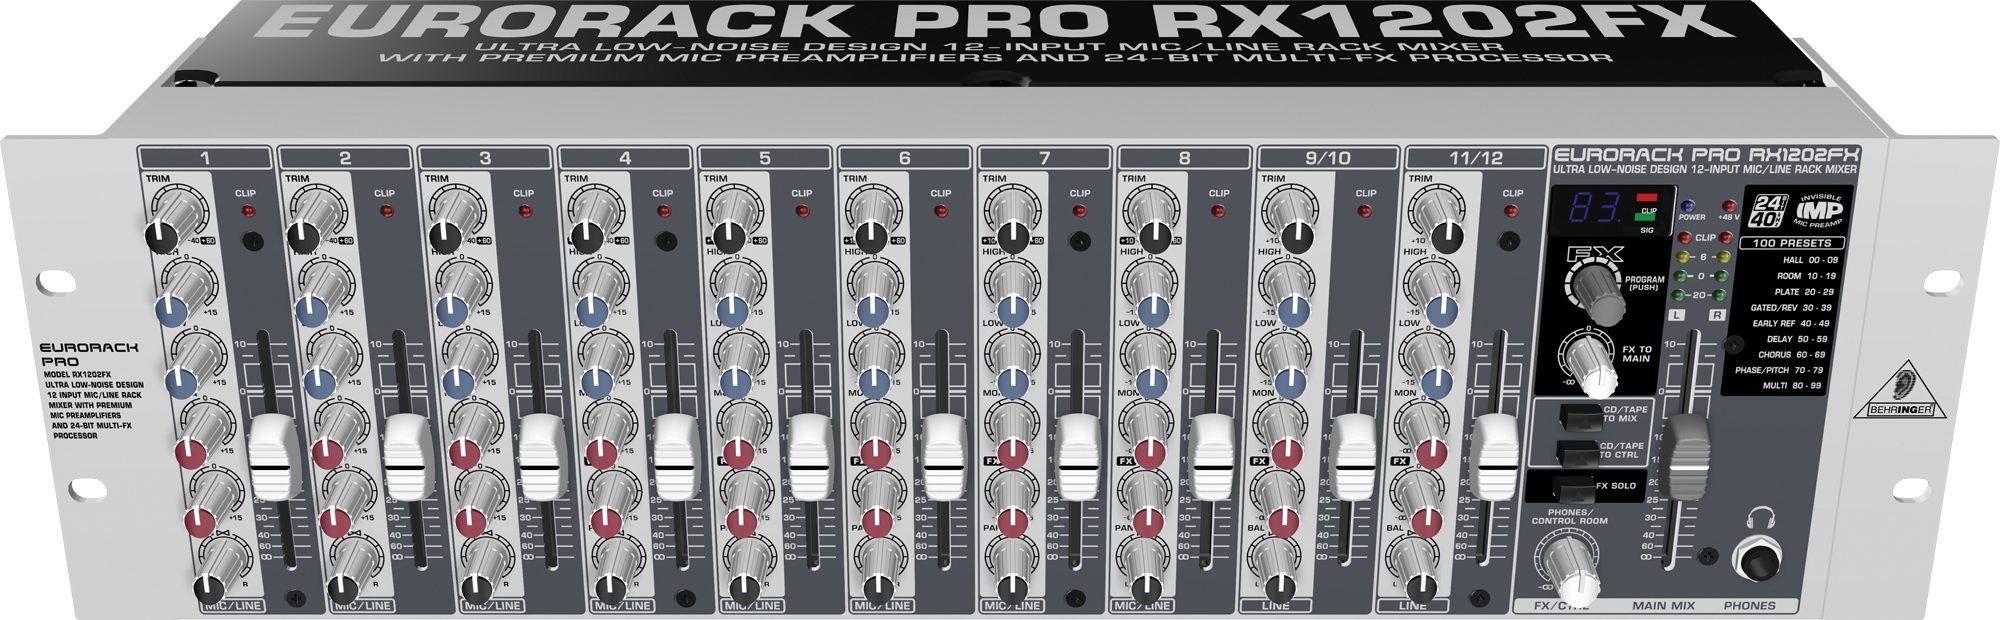 Behringer Eurorack Pro RX1202FX 12-Input Line Mixer | zZounds